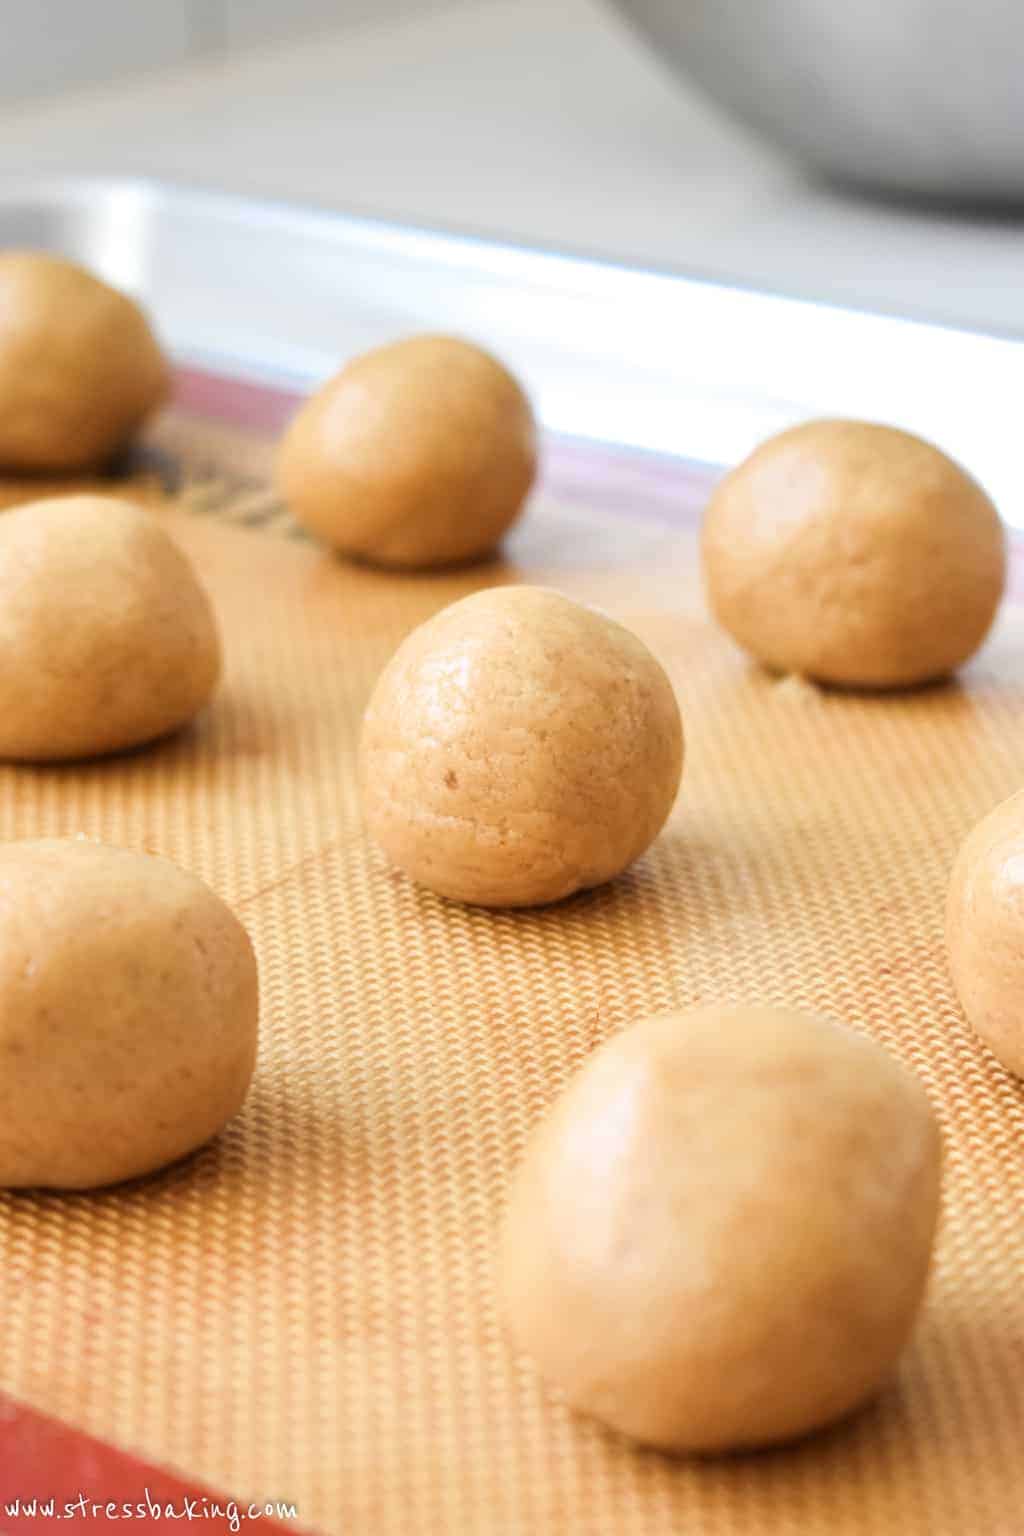 Smooth balls of tan colored dough on a baking sheet